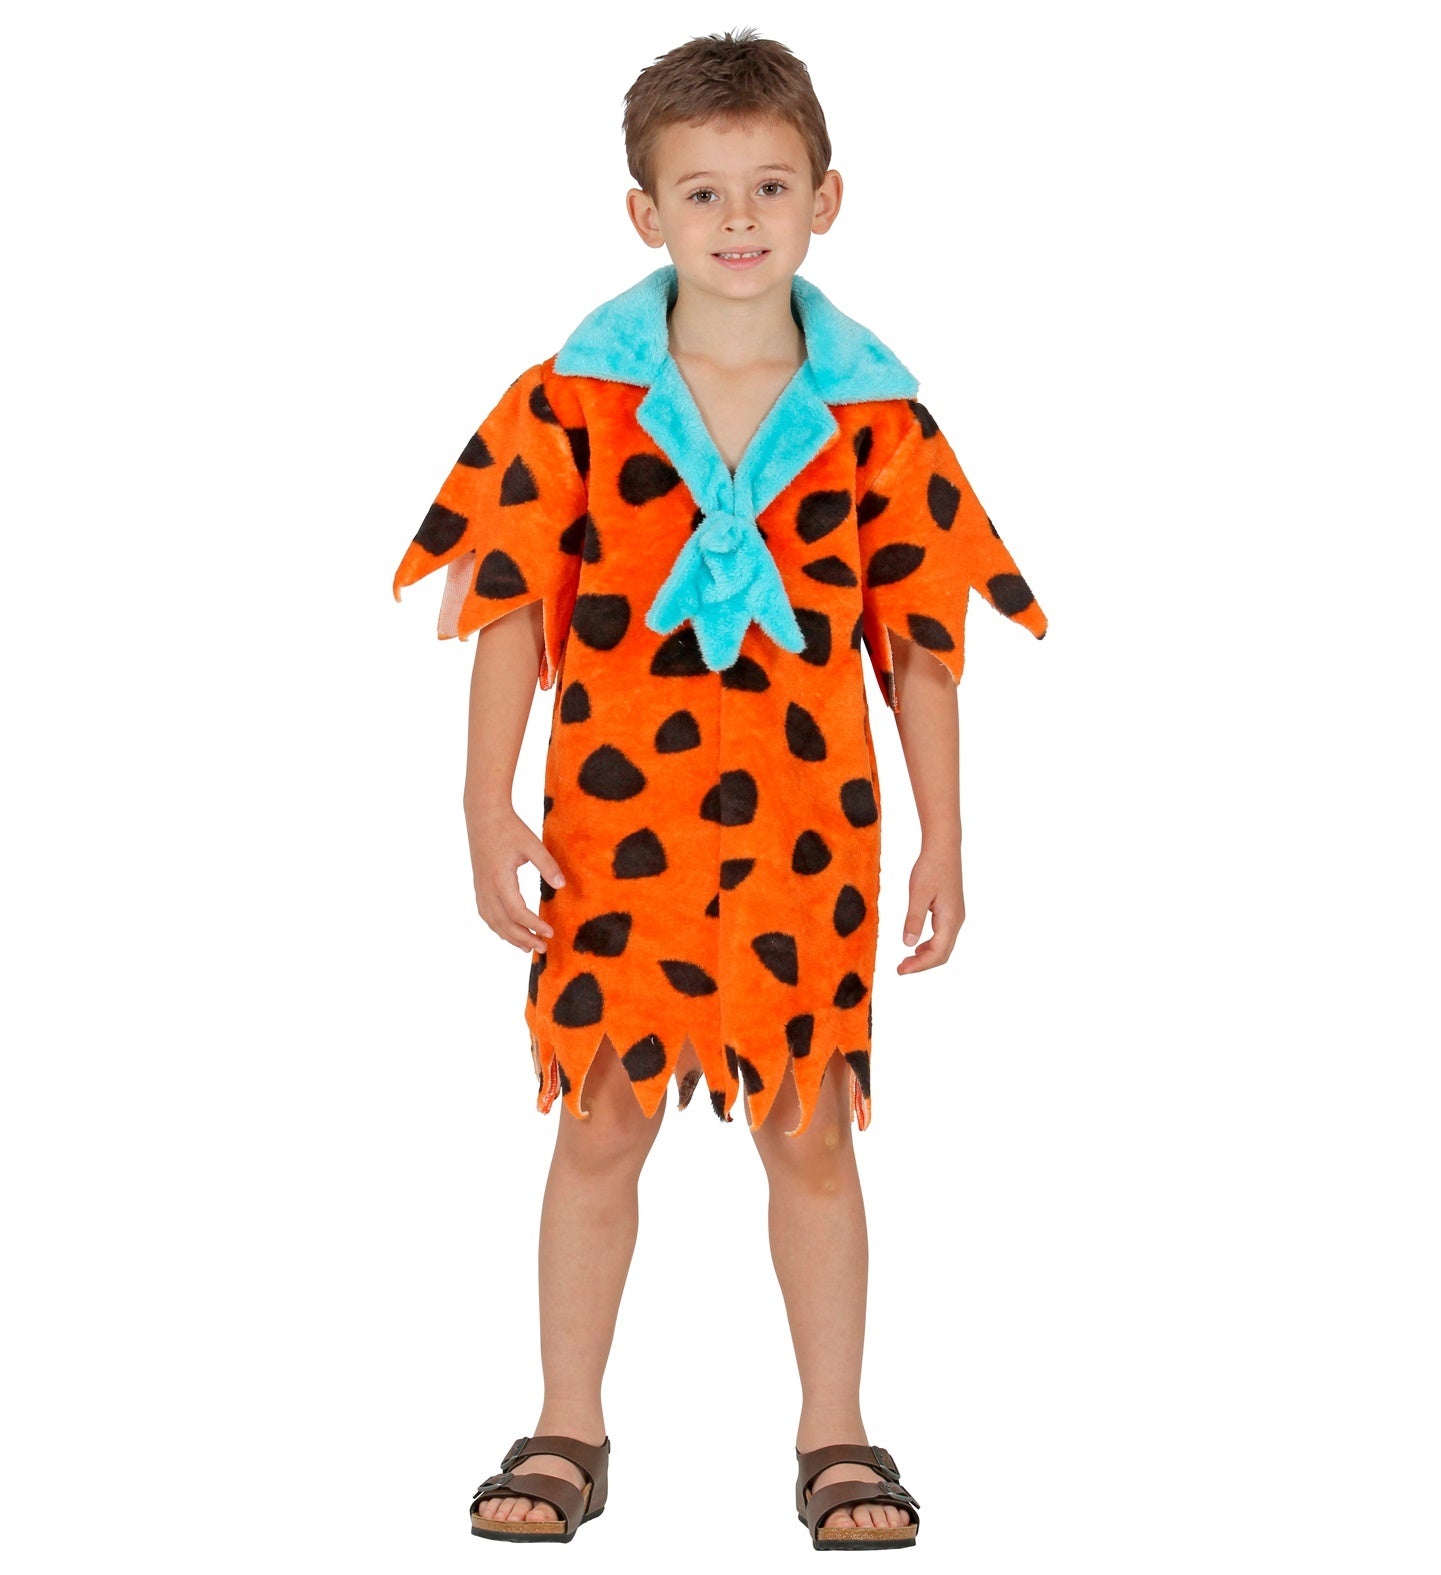 Widmann - The Flintstones Kostuum - Bam Bam Flintsteen - Jongen - oranje - Maat 104 - Carnavalskleding - Verkleedkleding